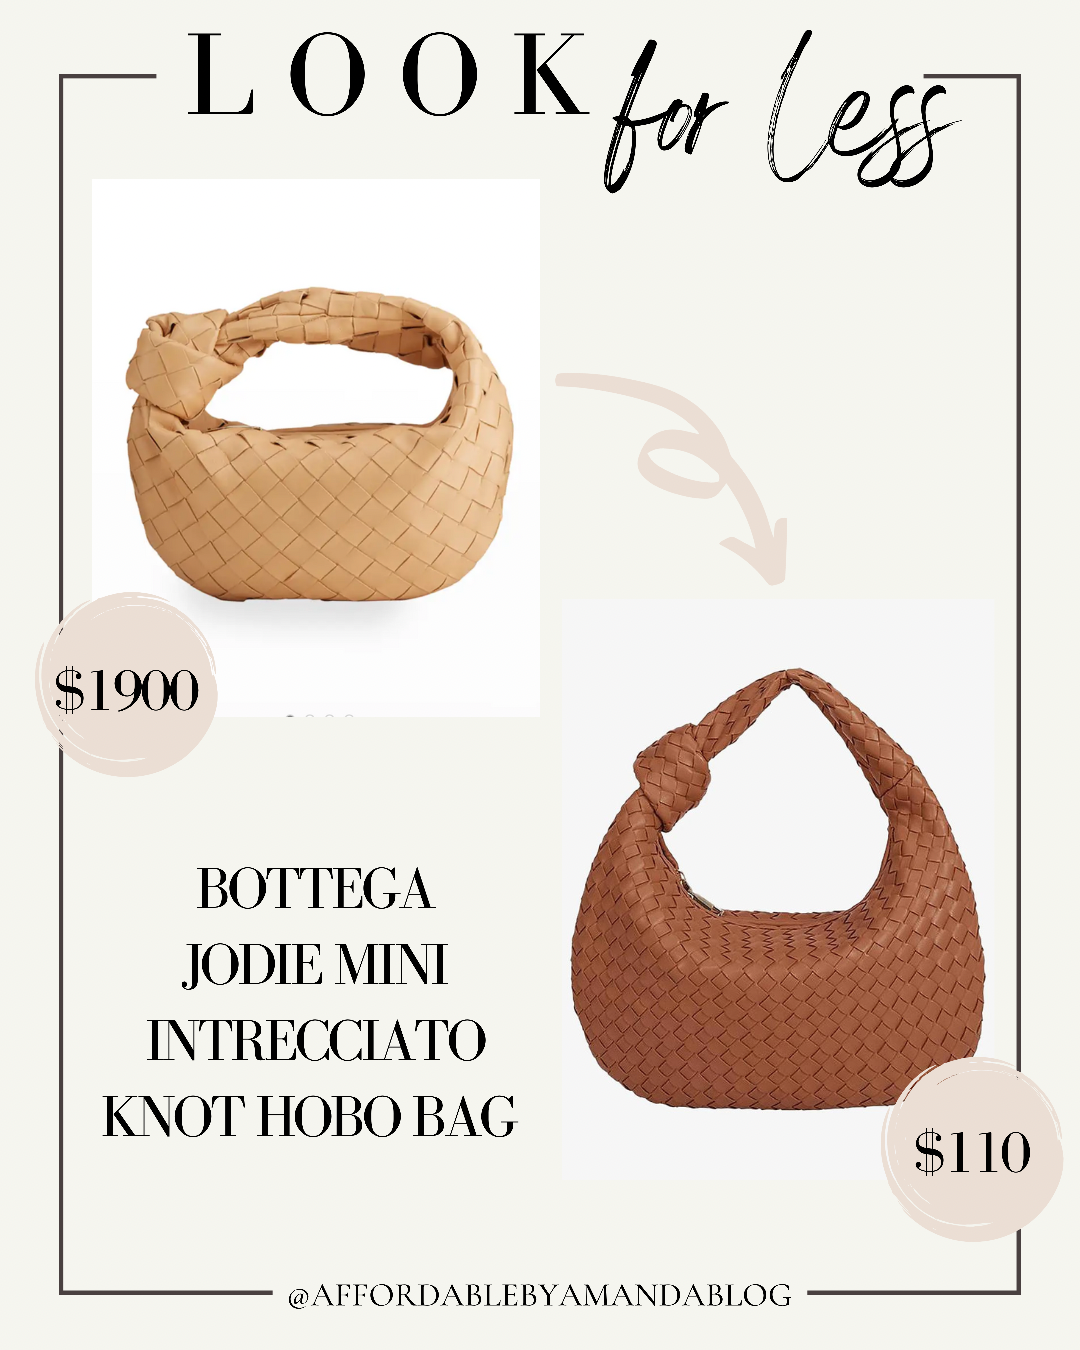 Bottega Veneta Jodie Mini Intrecciato Knot Hobo Bag | Look for Less | Affordable by Amanda